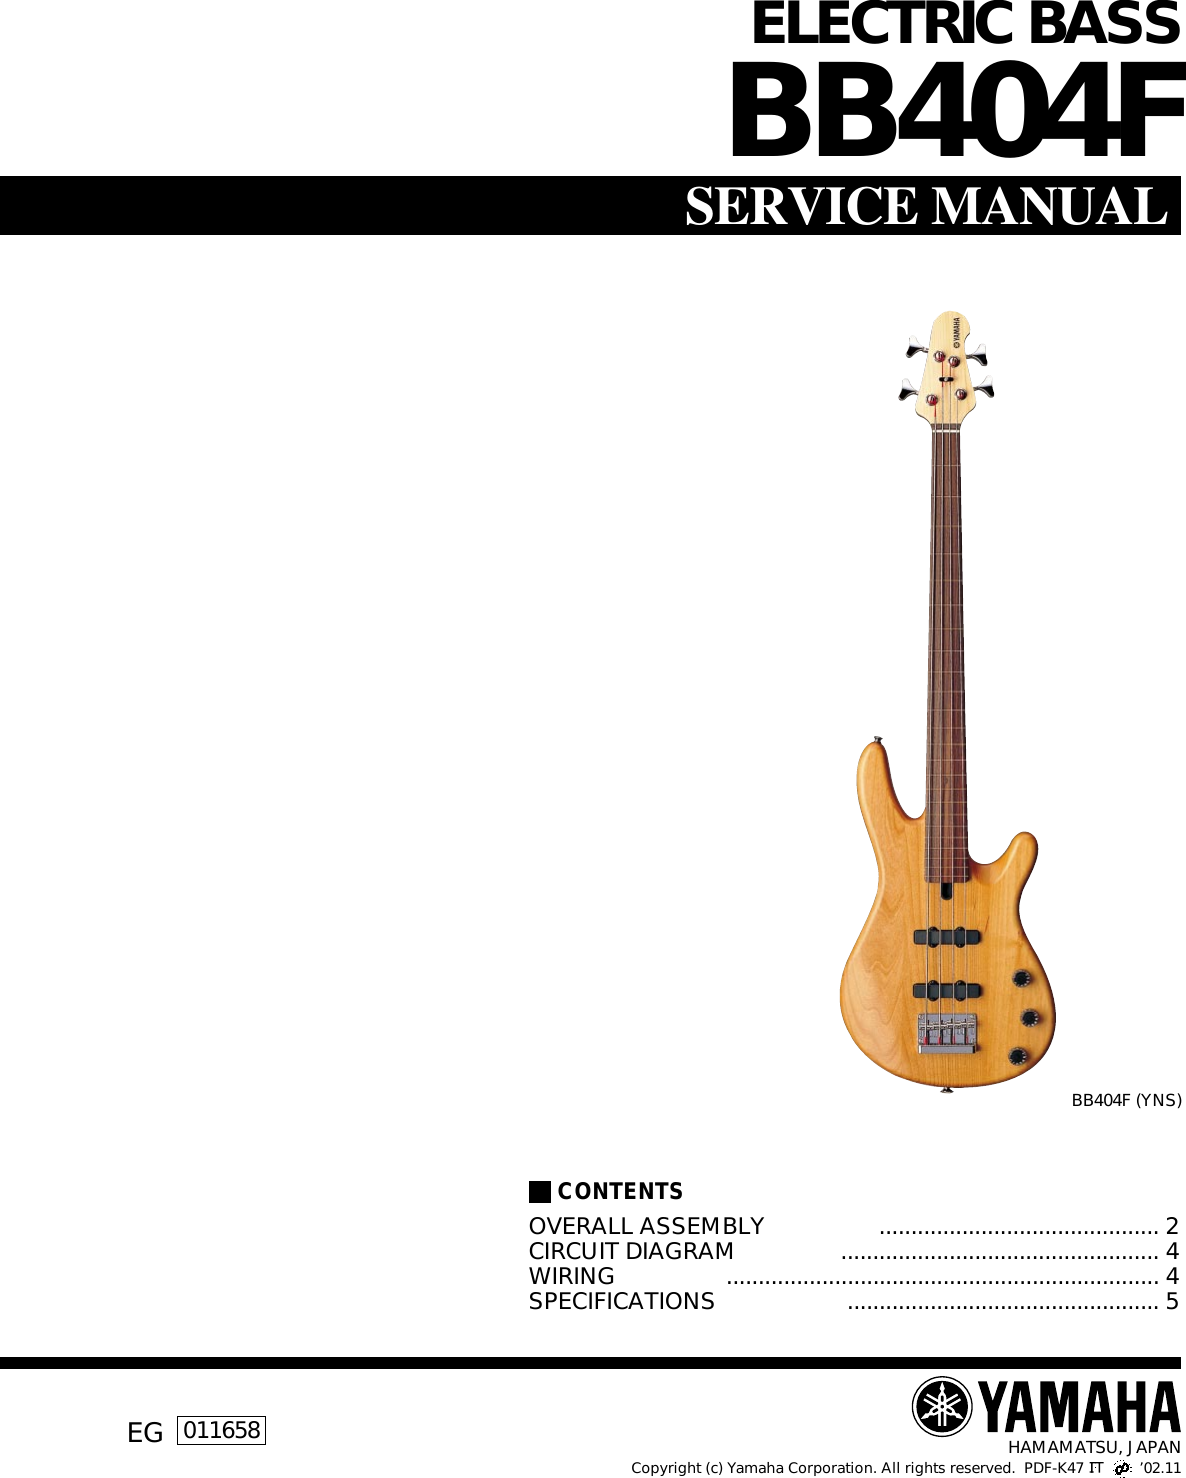 Page 1 of 5 - Yamaha Guitar-Bb404F-Users-Manual ELECTRIC BASS  Yamaha-guitar-bb404f-users-manual